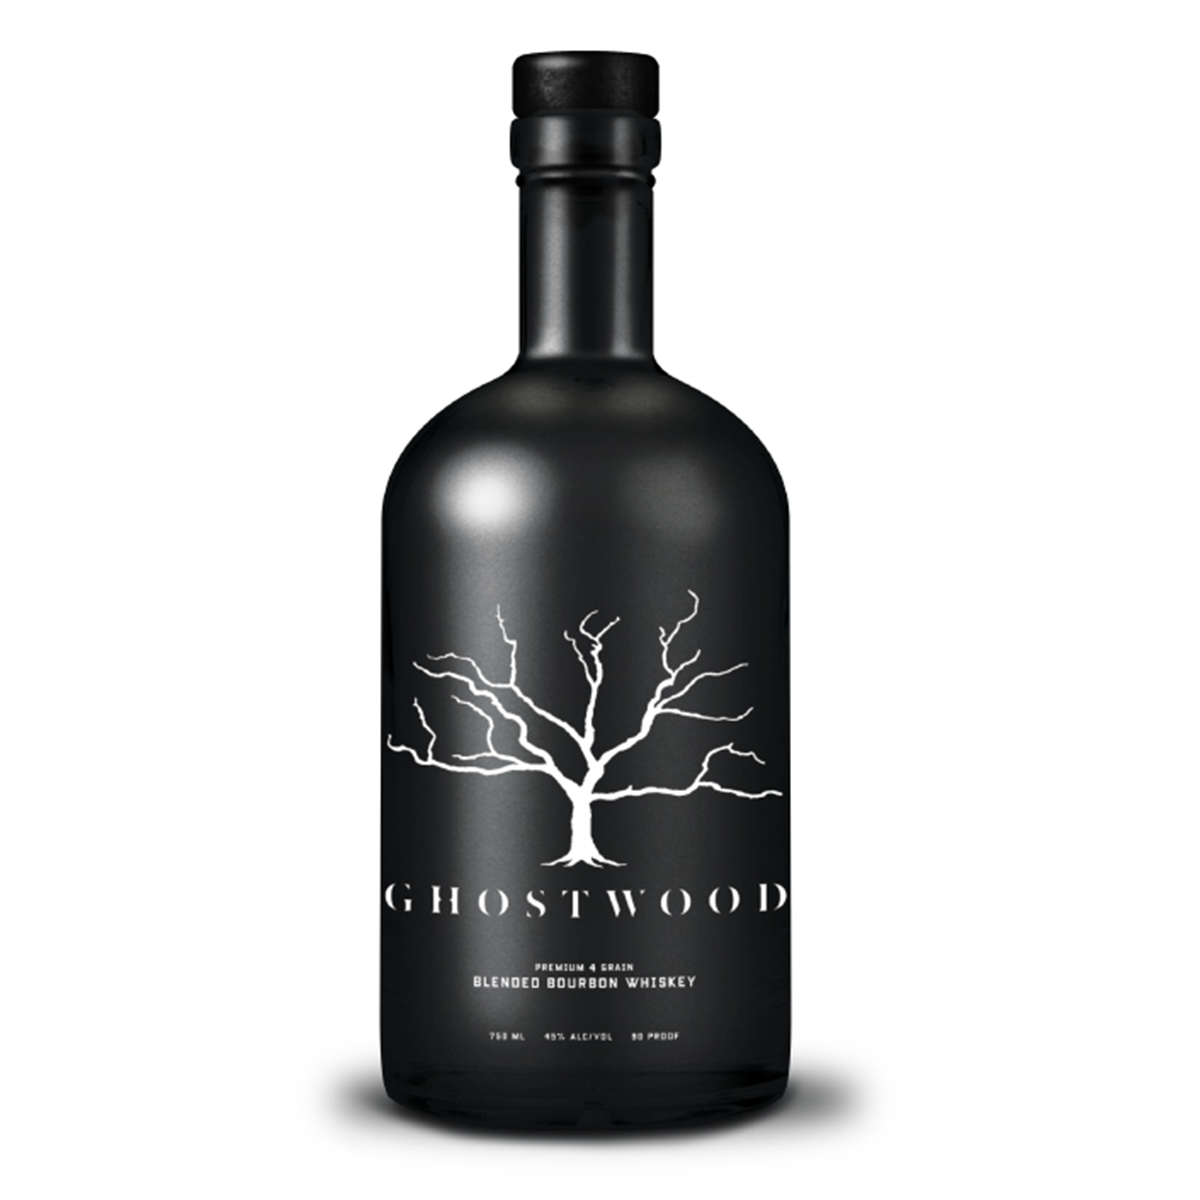 Ghostwood Blended Bourbon